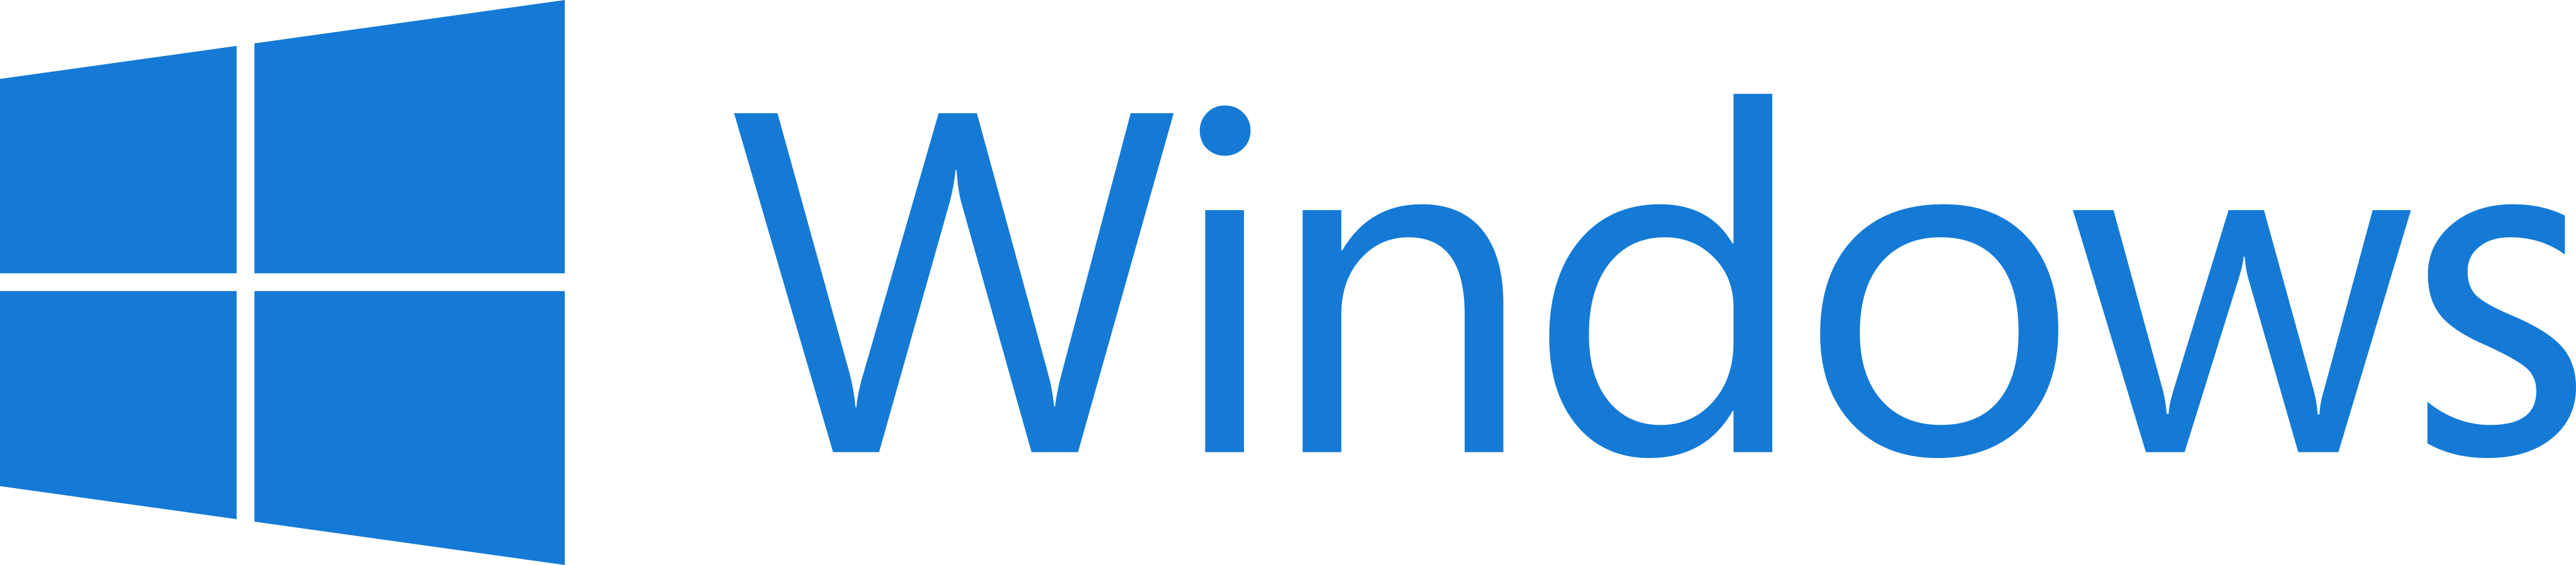 windows logo 1 - Windows Logo